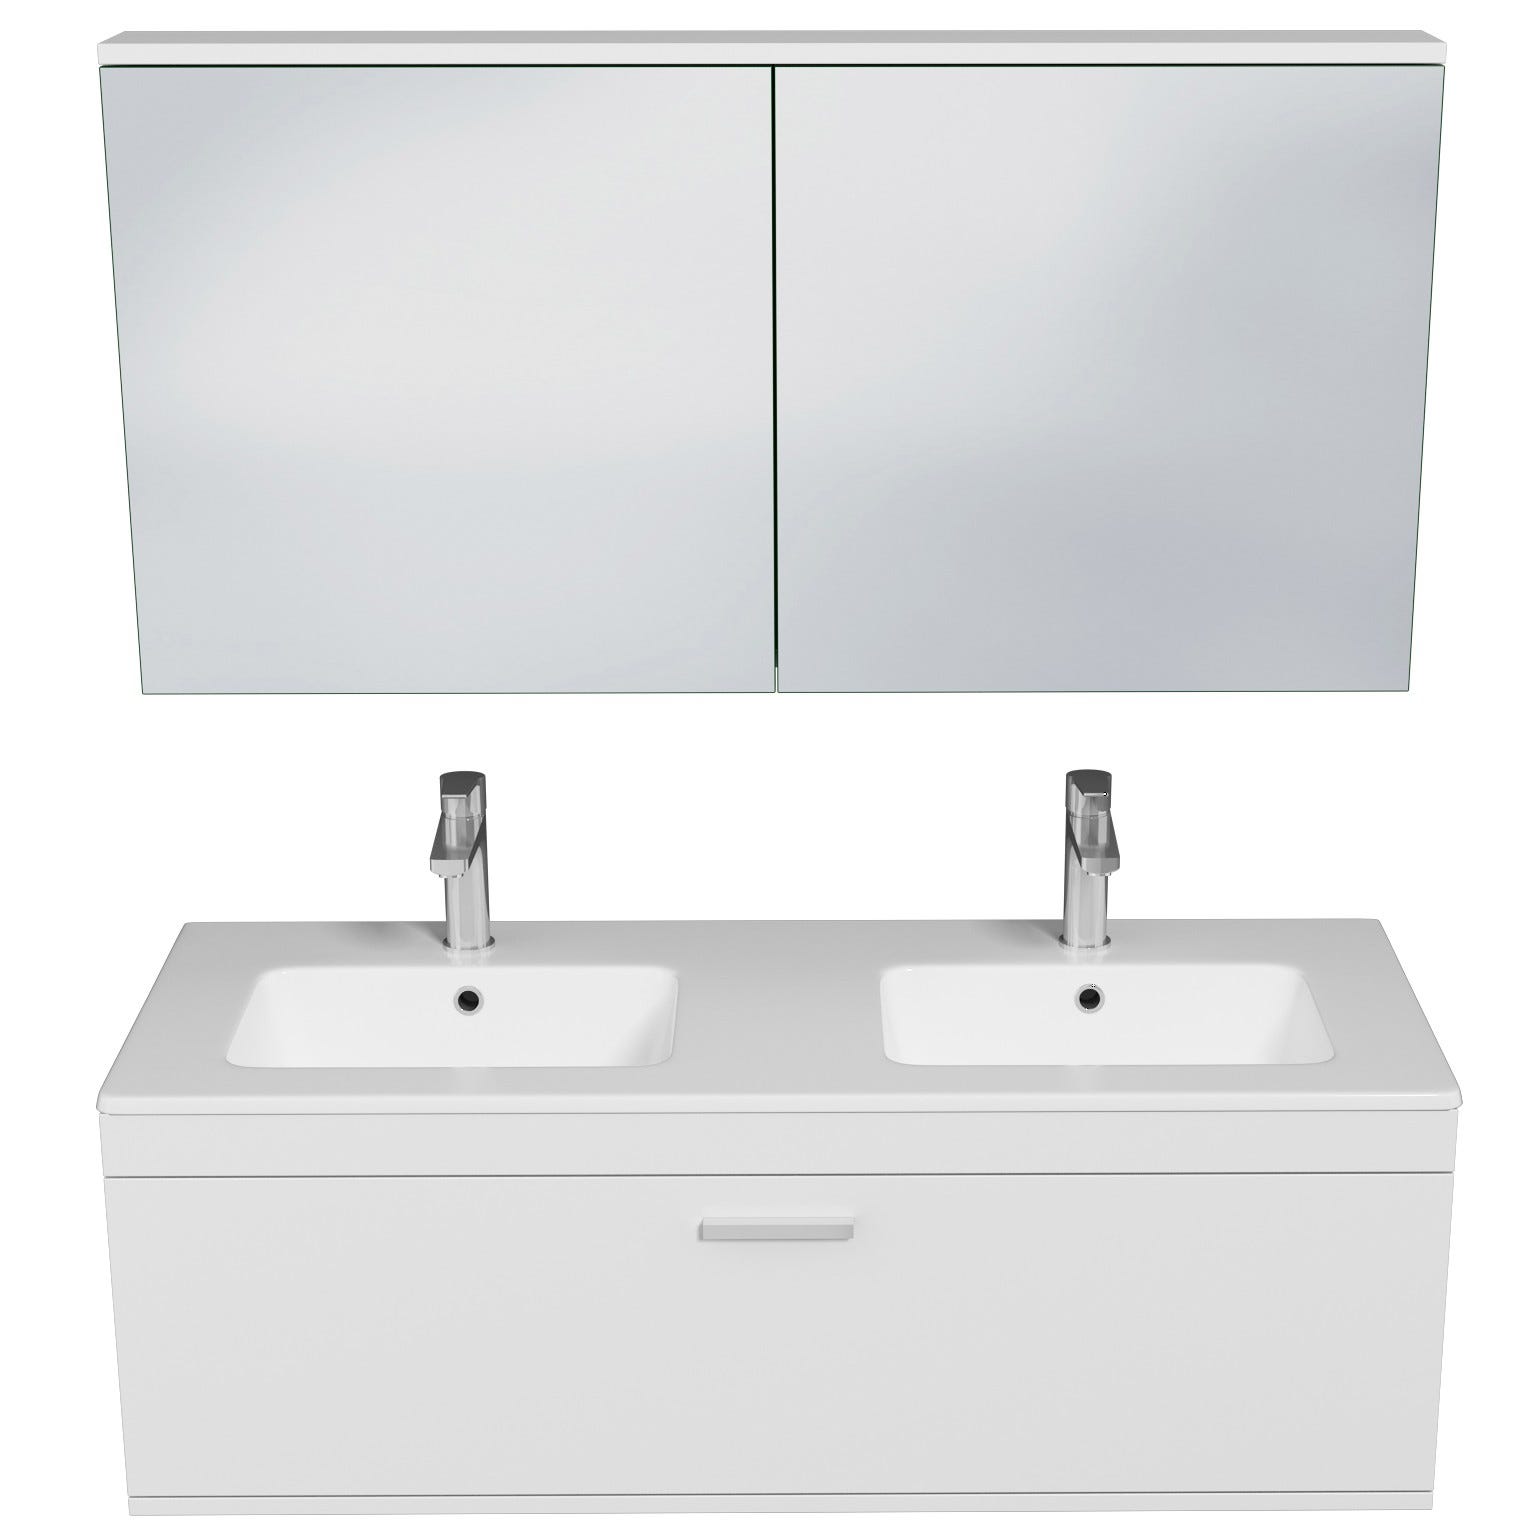 RUBITE Meuble salle de bain double vasque 1 tiroir blanc largeur 120 cm + miroir armoire 3